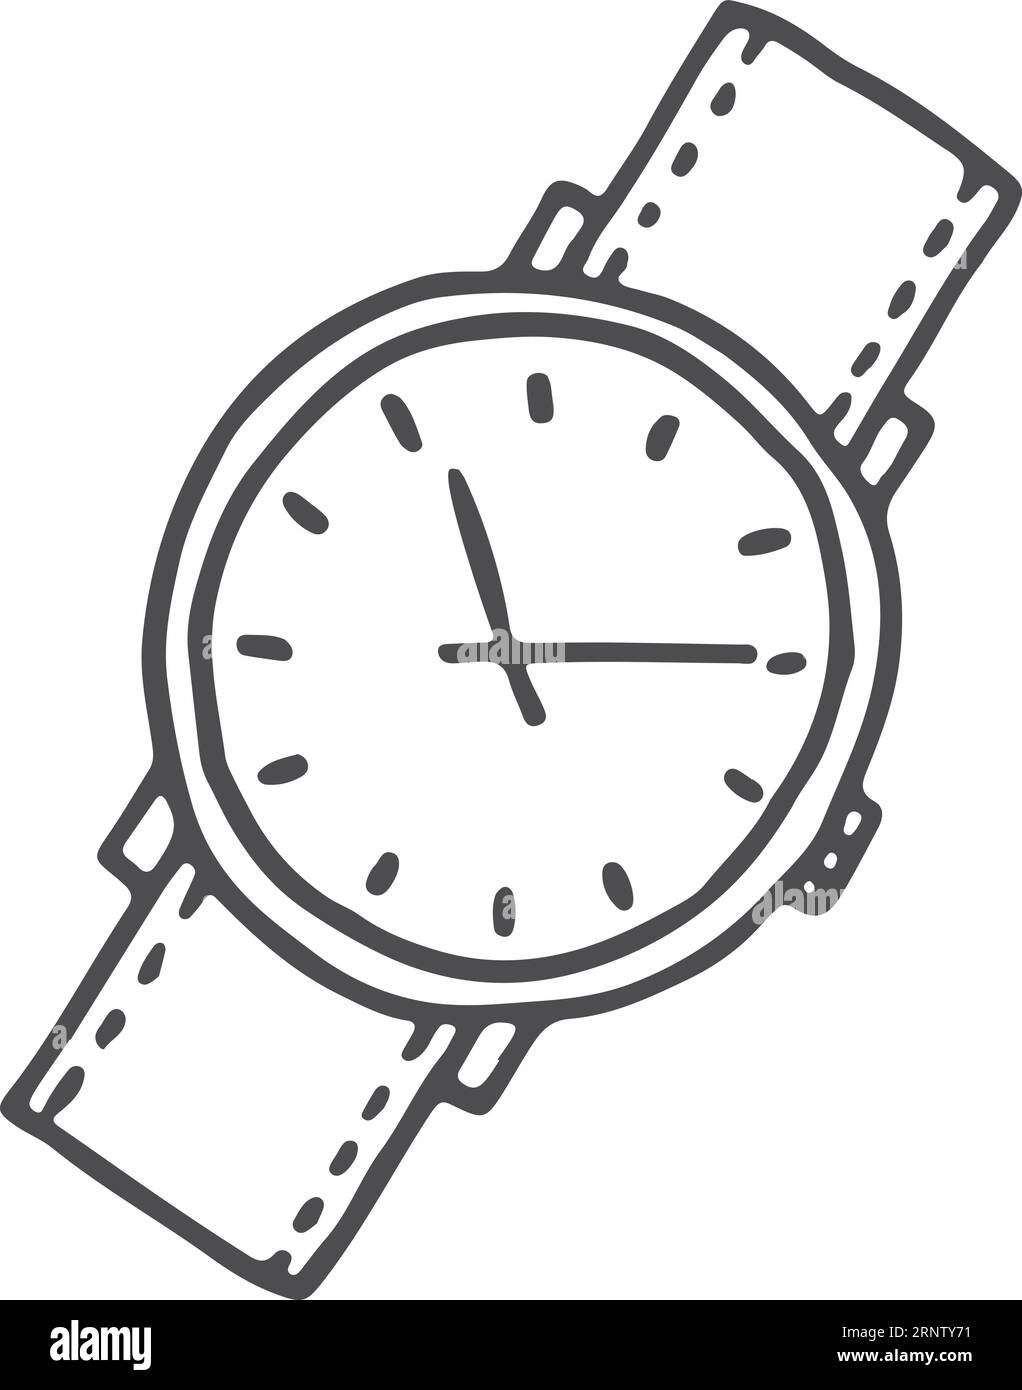 Reloj inteligente redondo lado derecho aislado en fondo blanco